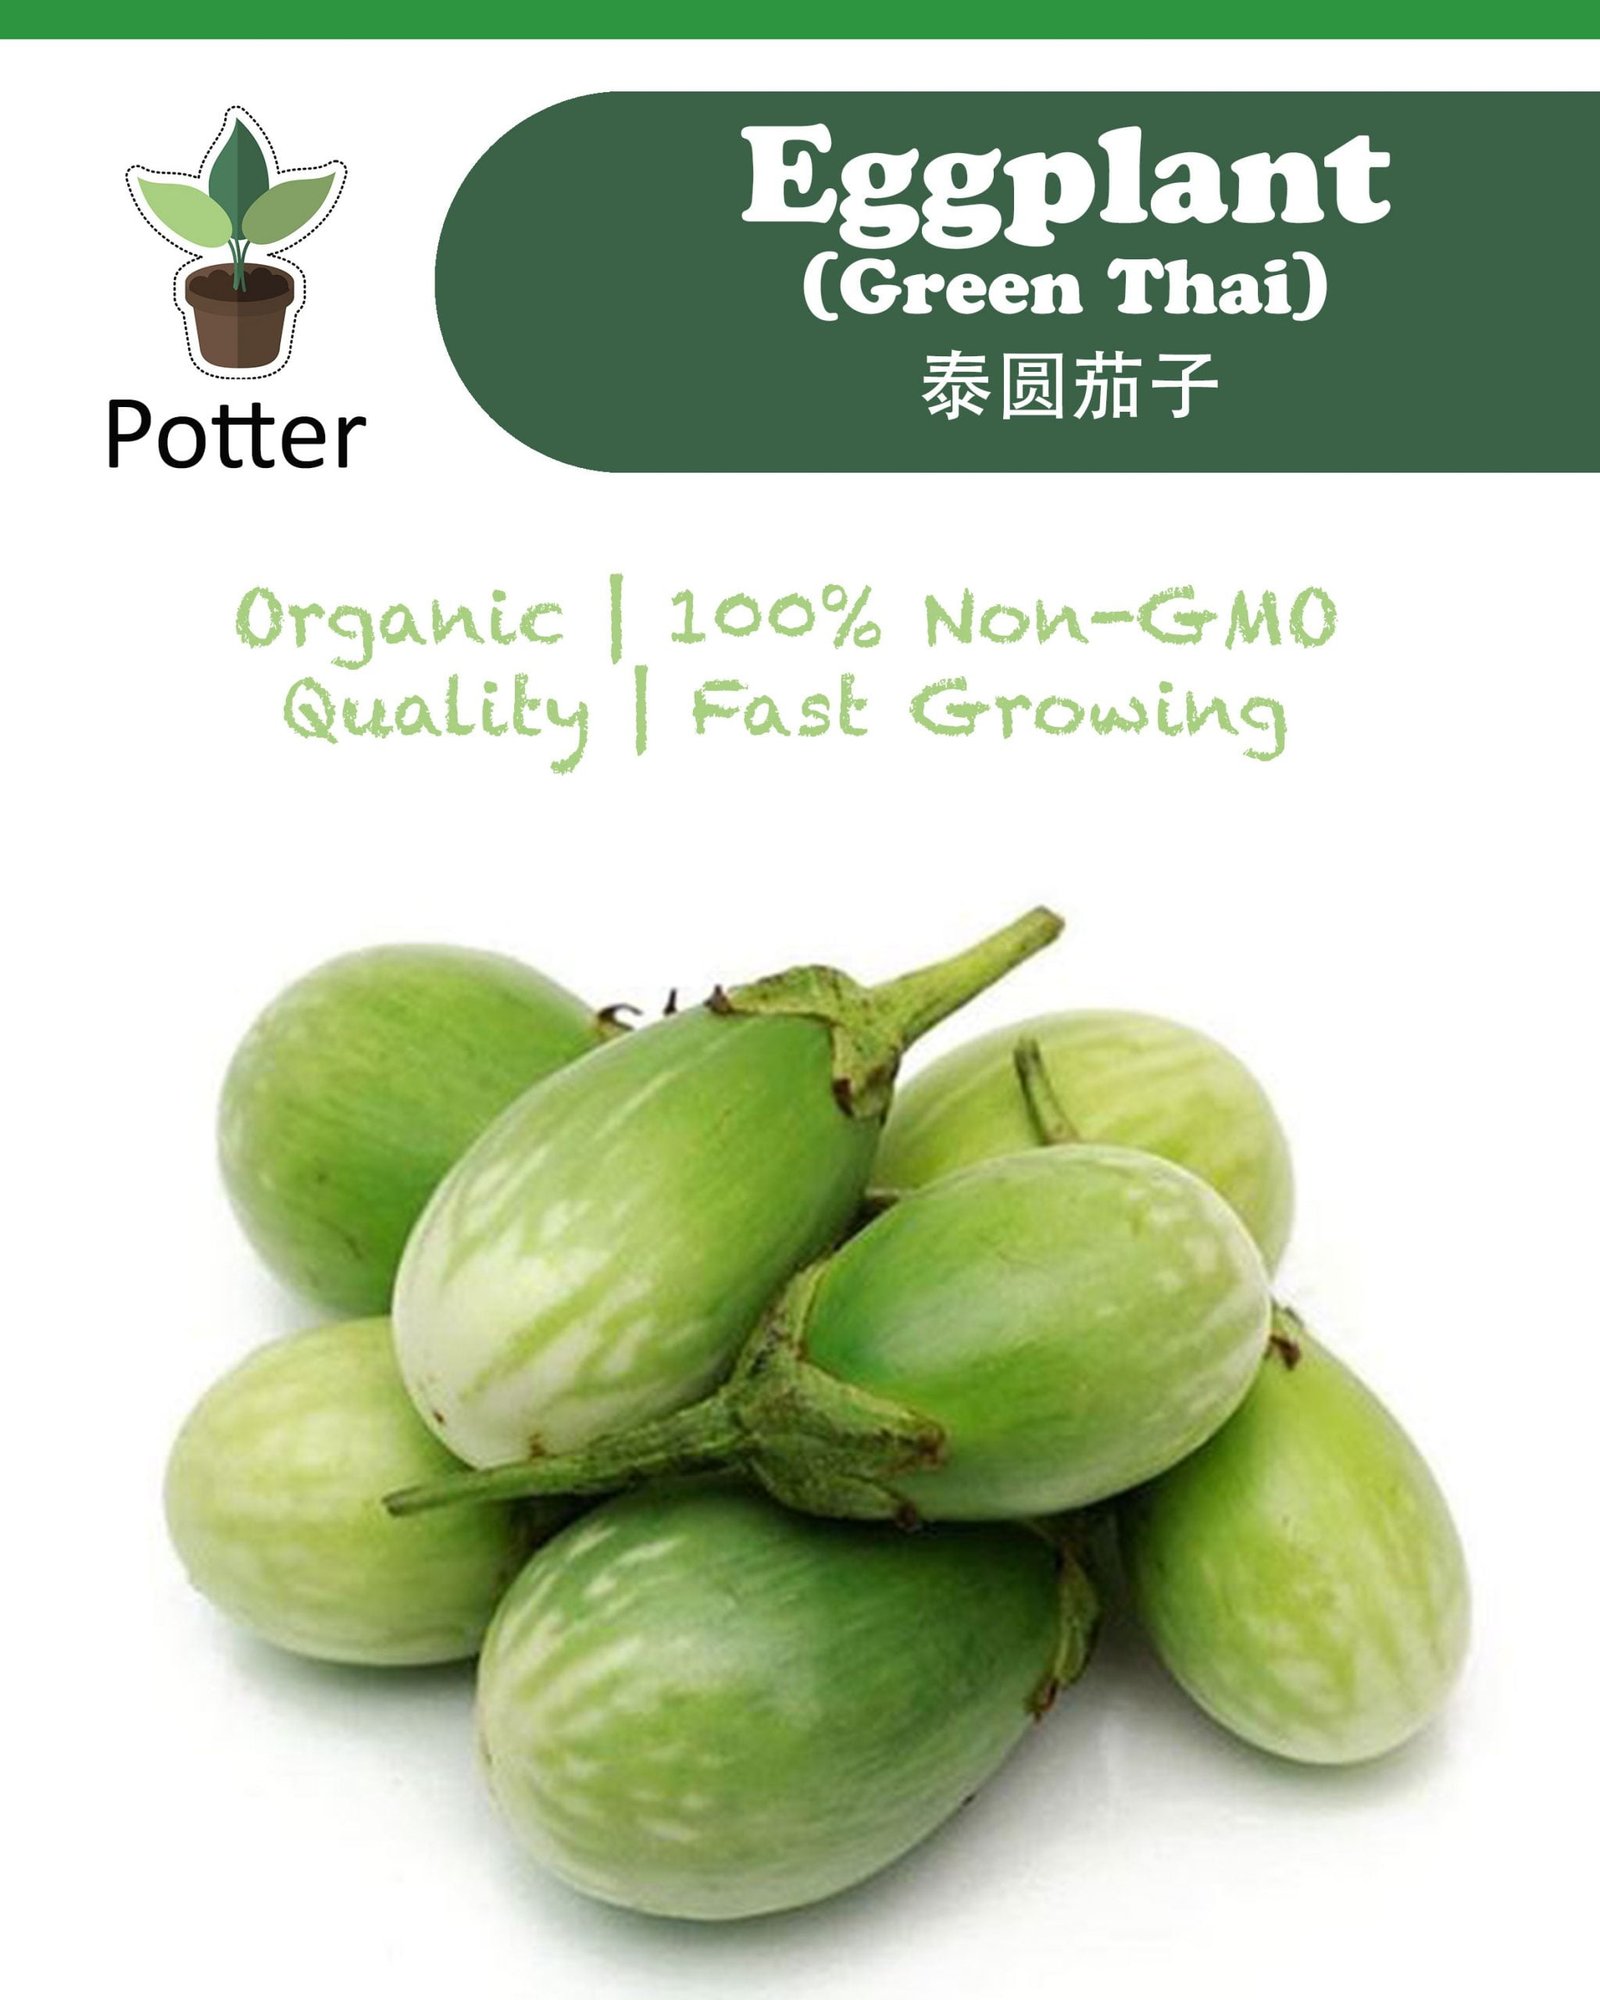 Green Thai Eggplant – Sierra Flora